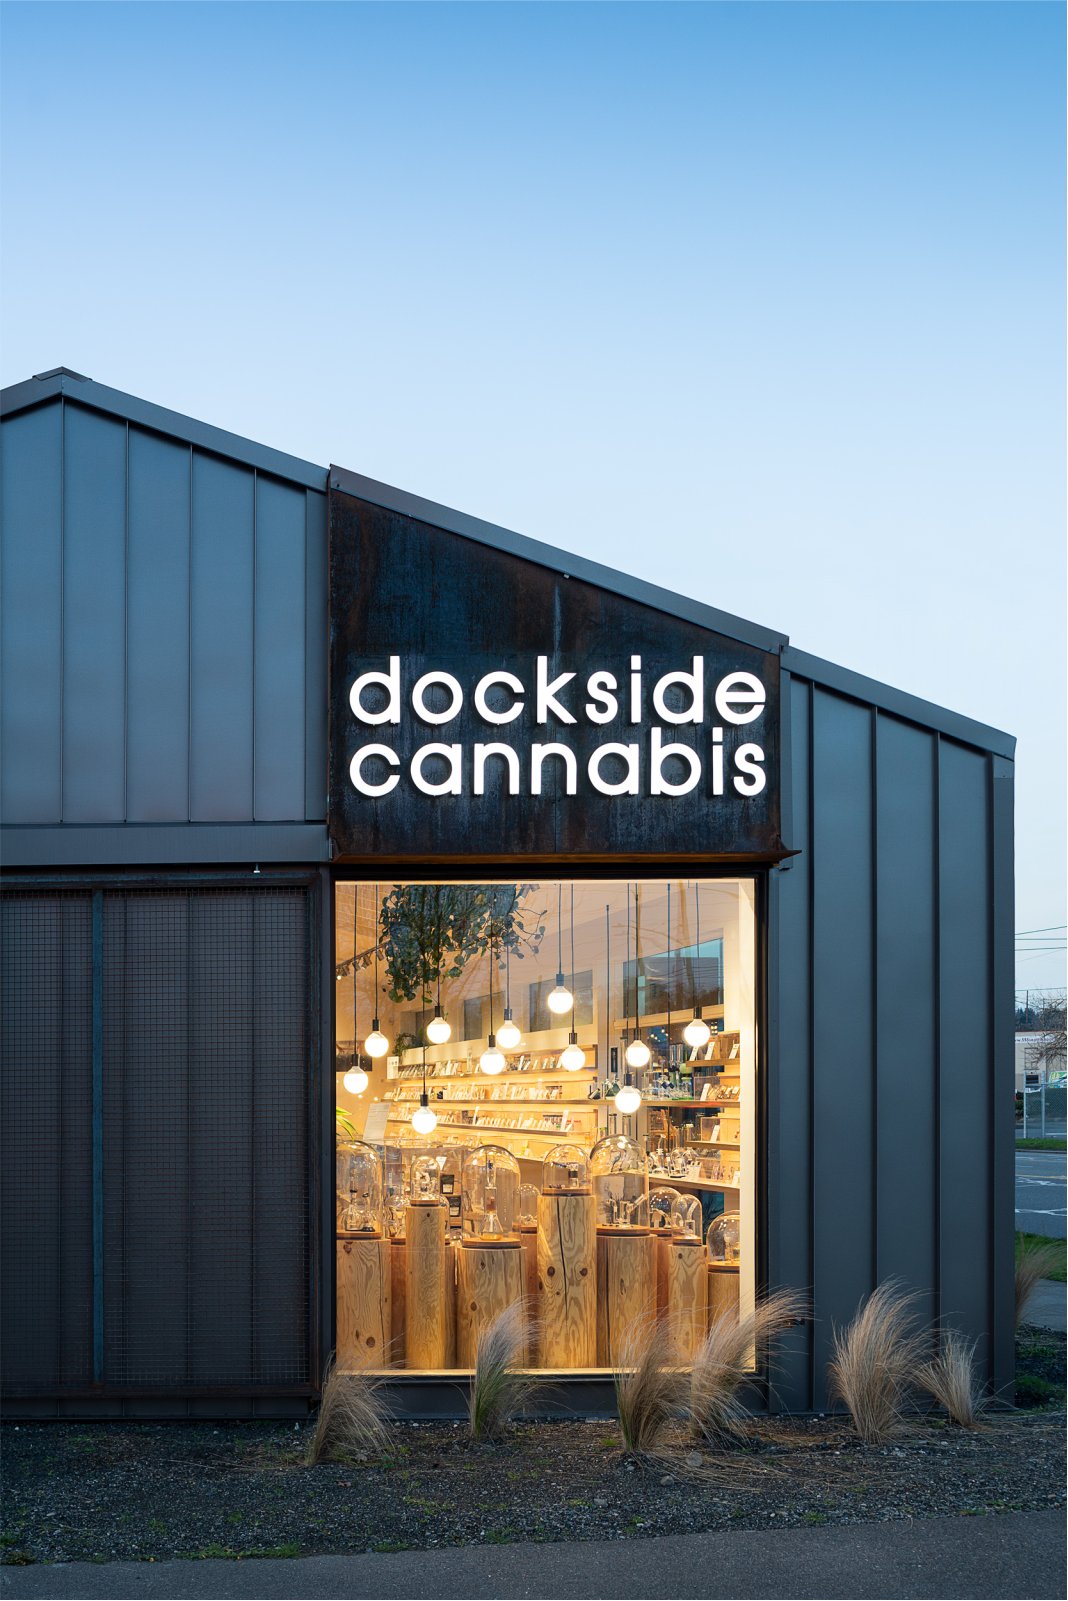 Dockside Cannabis